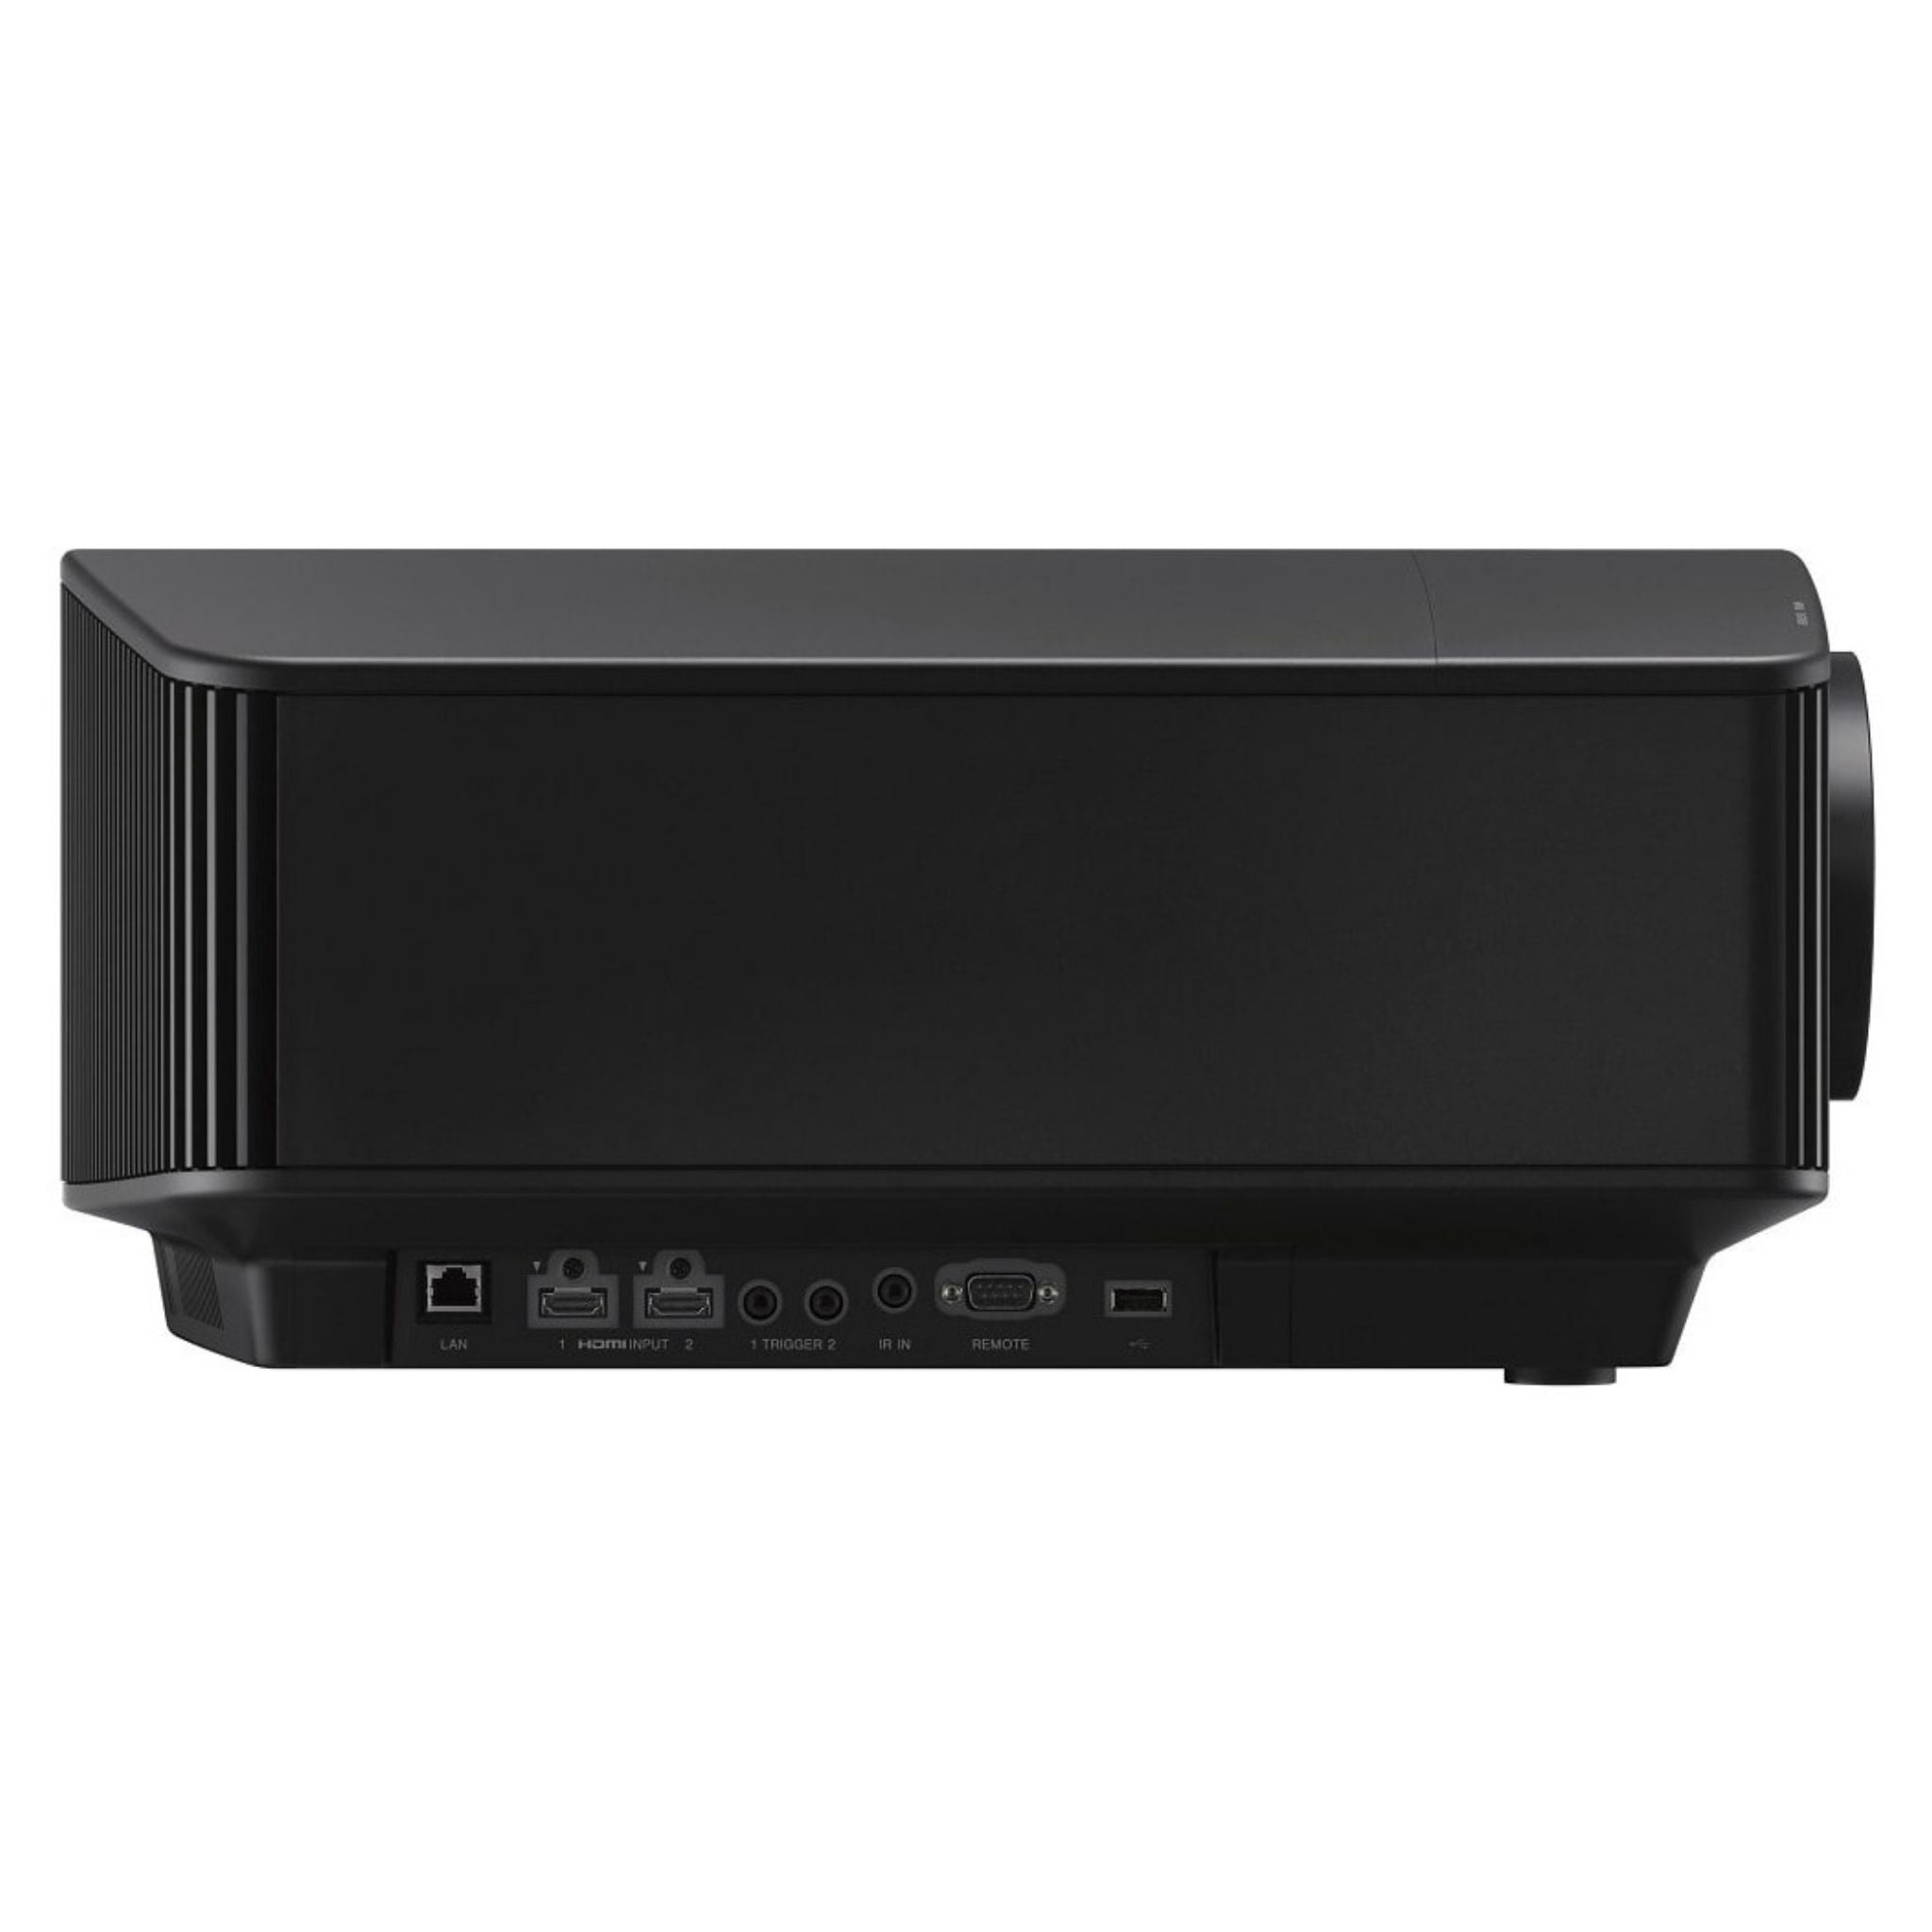 Sony VPL-VW870ES - 4K Home Theater Projector - AVStore